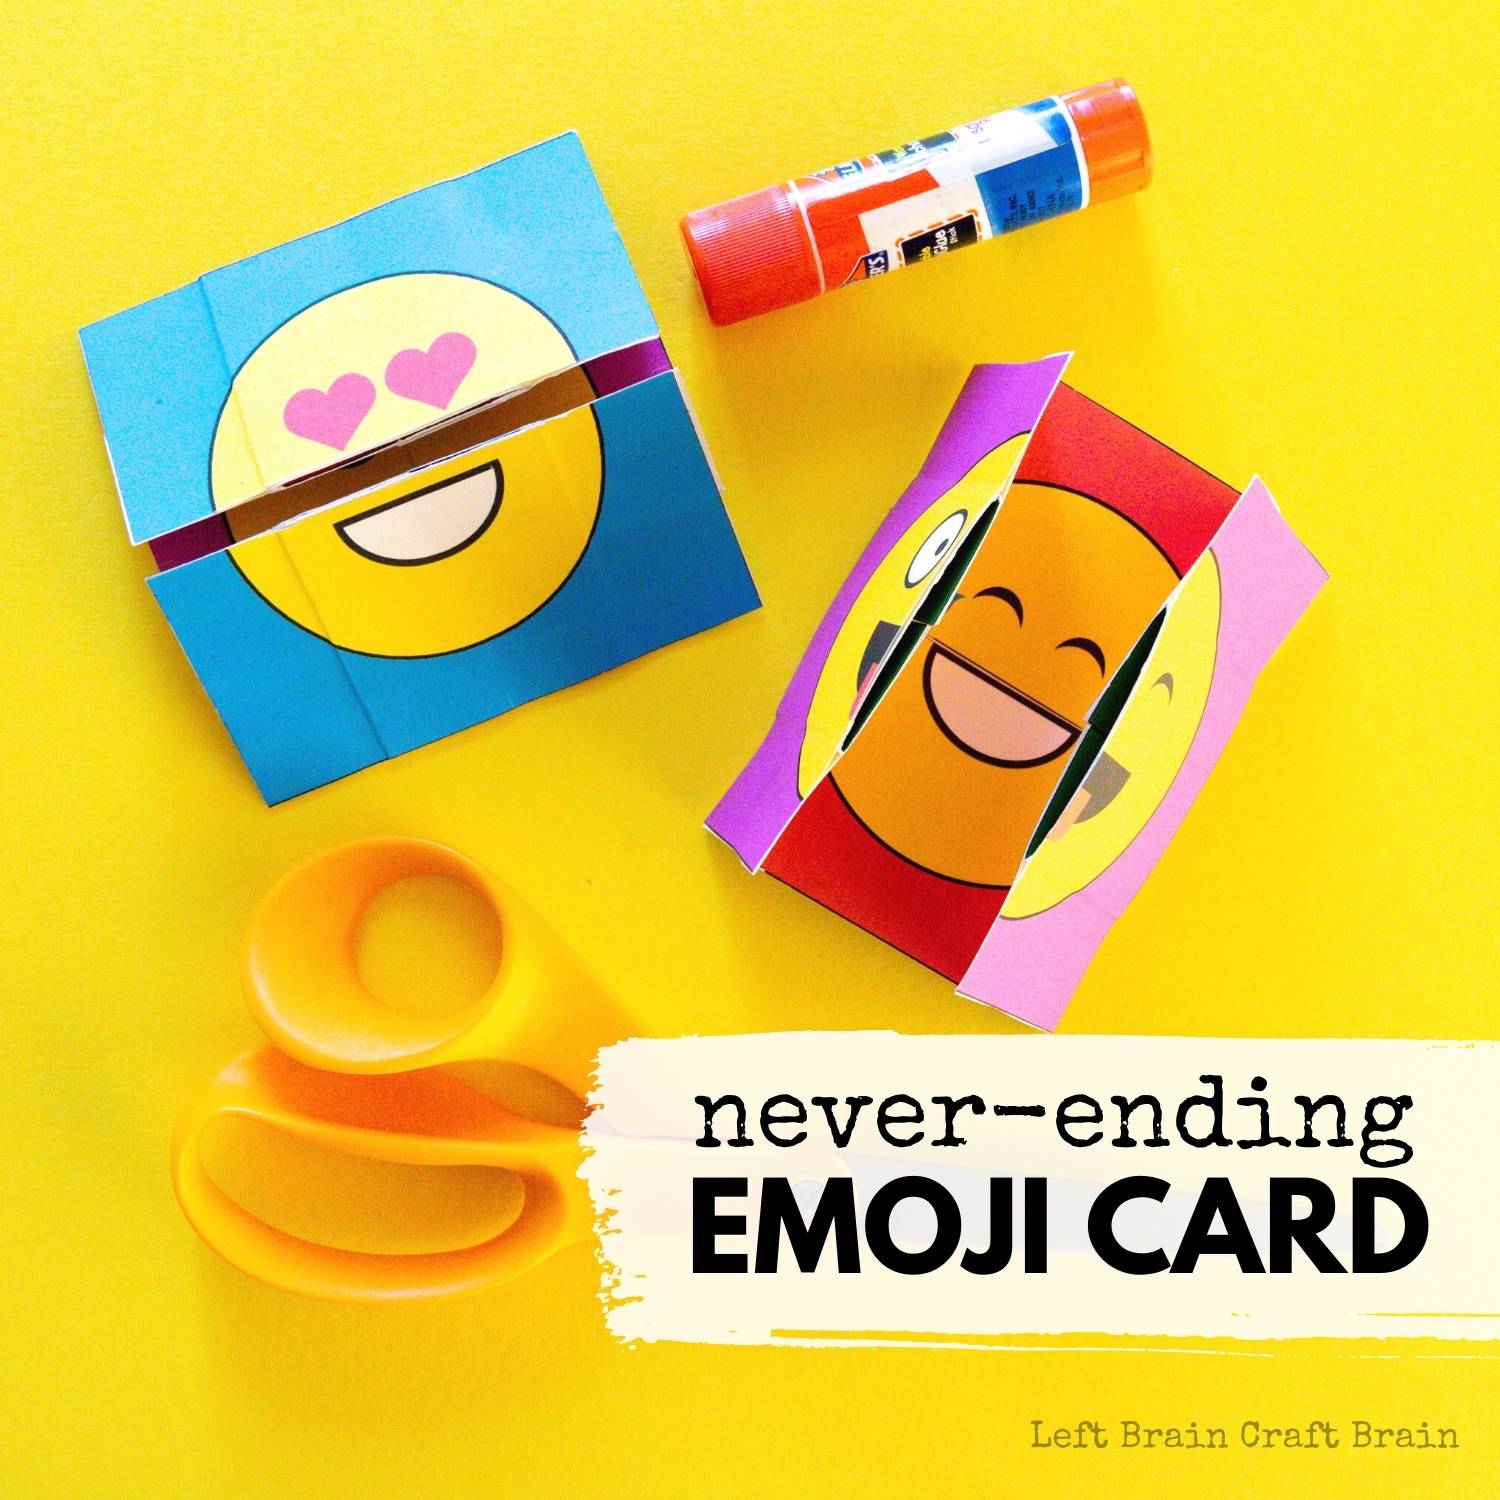 Never-ending-Emoji-Card-1500x1500-1